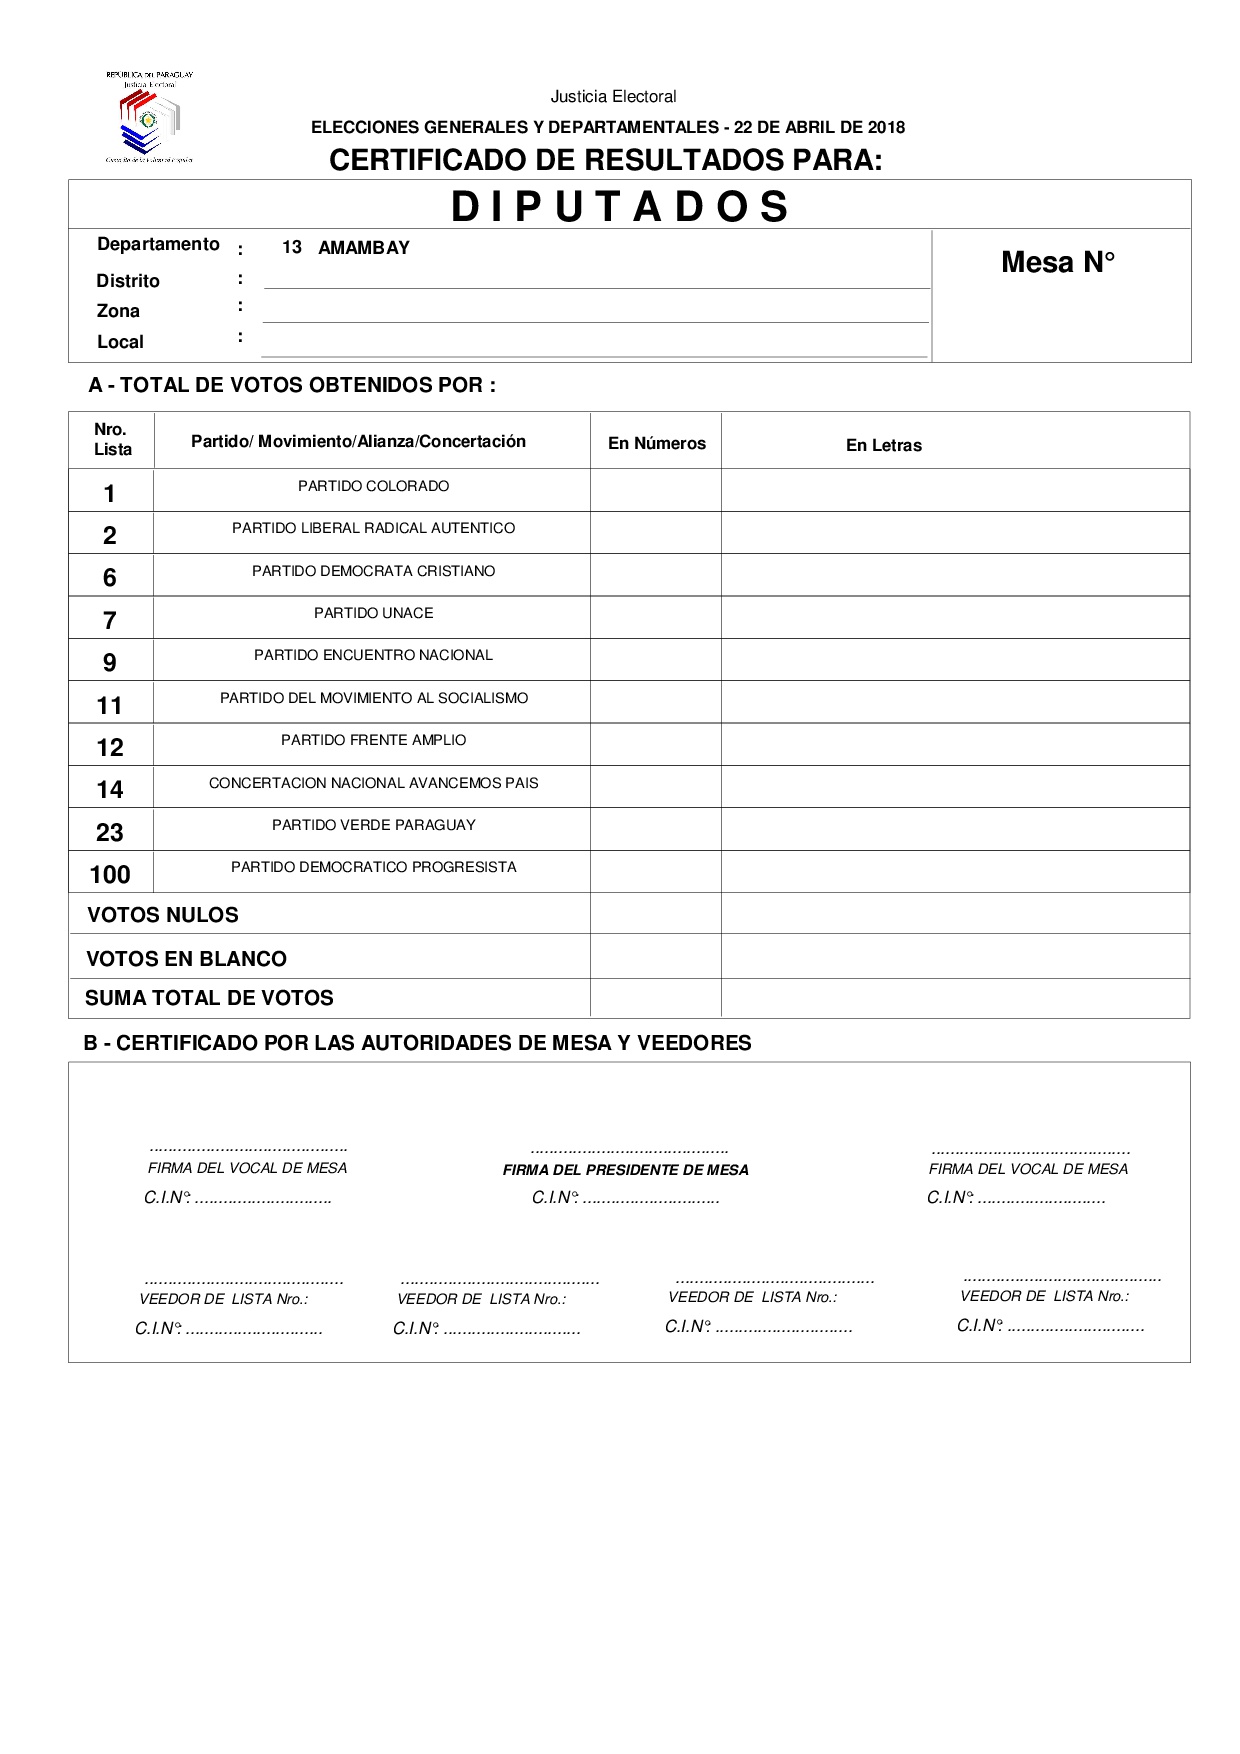 Certificado de Resultados Para Diputados de AMAMBAY